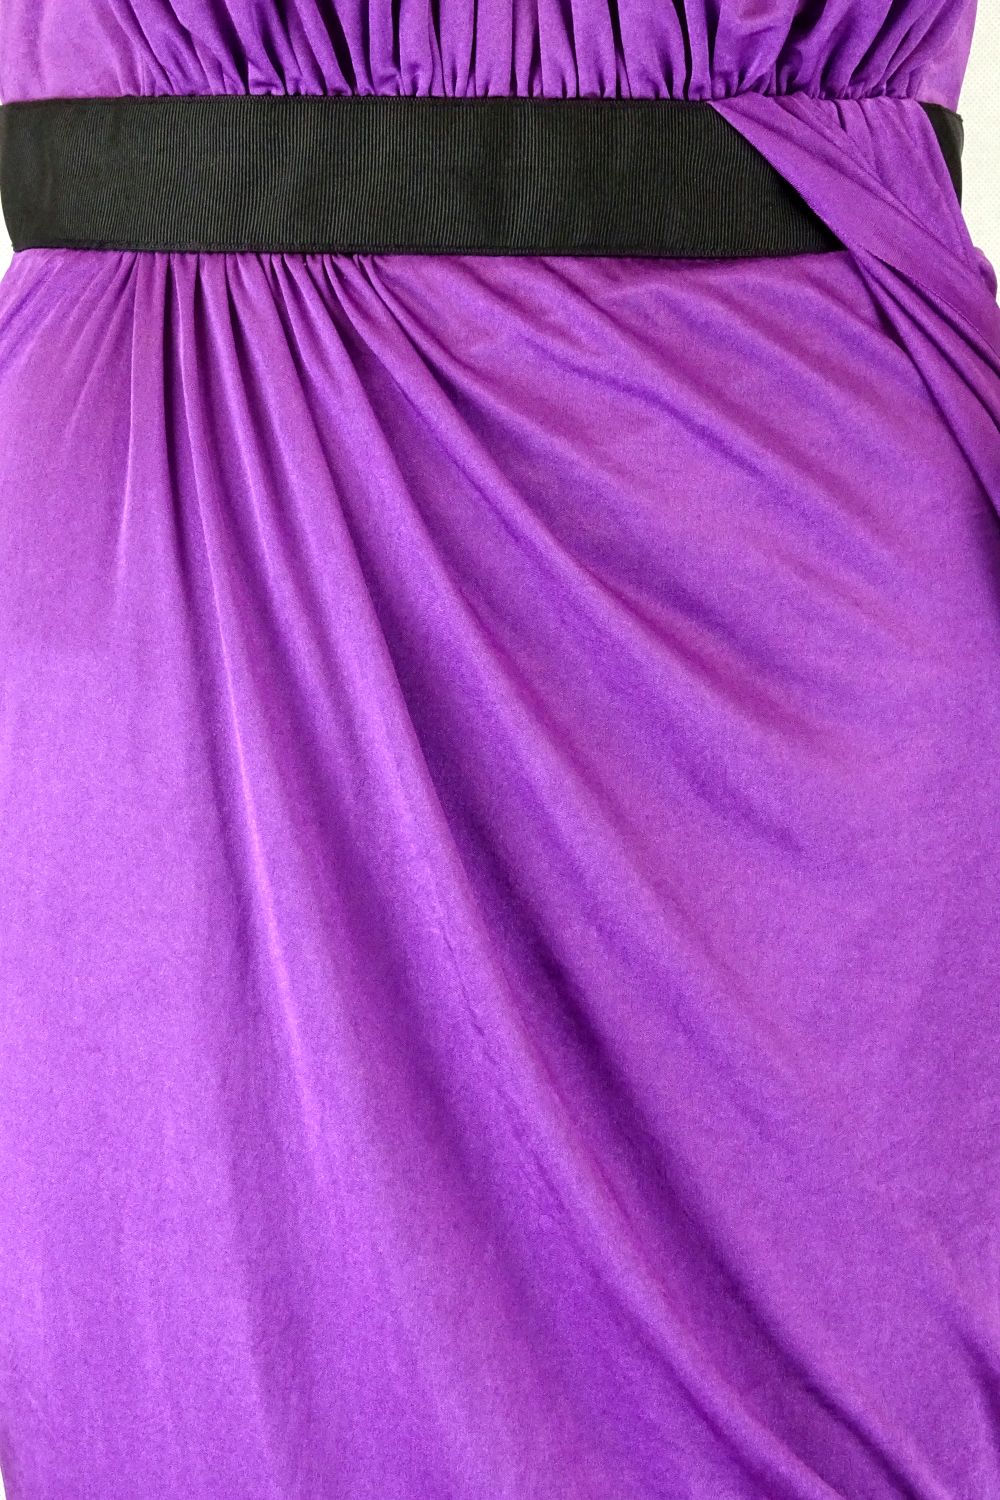 Sheike Purple Dress Size 10